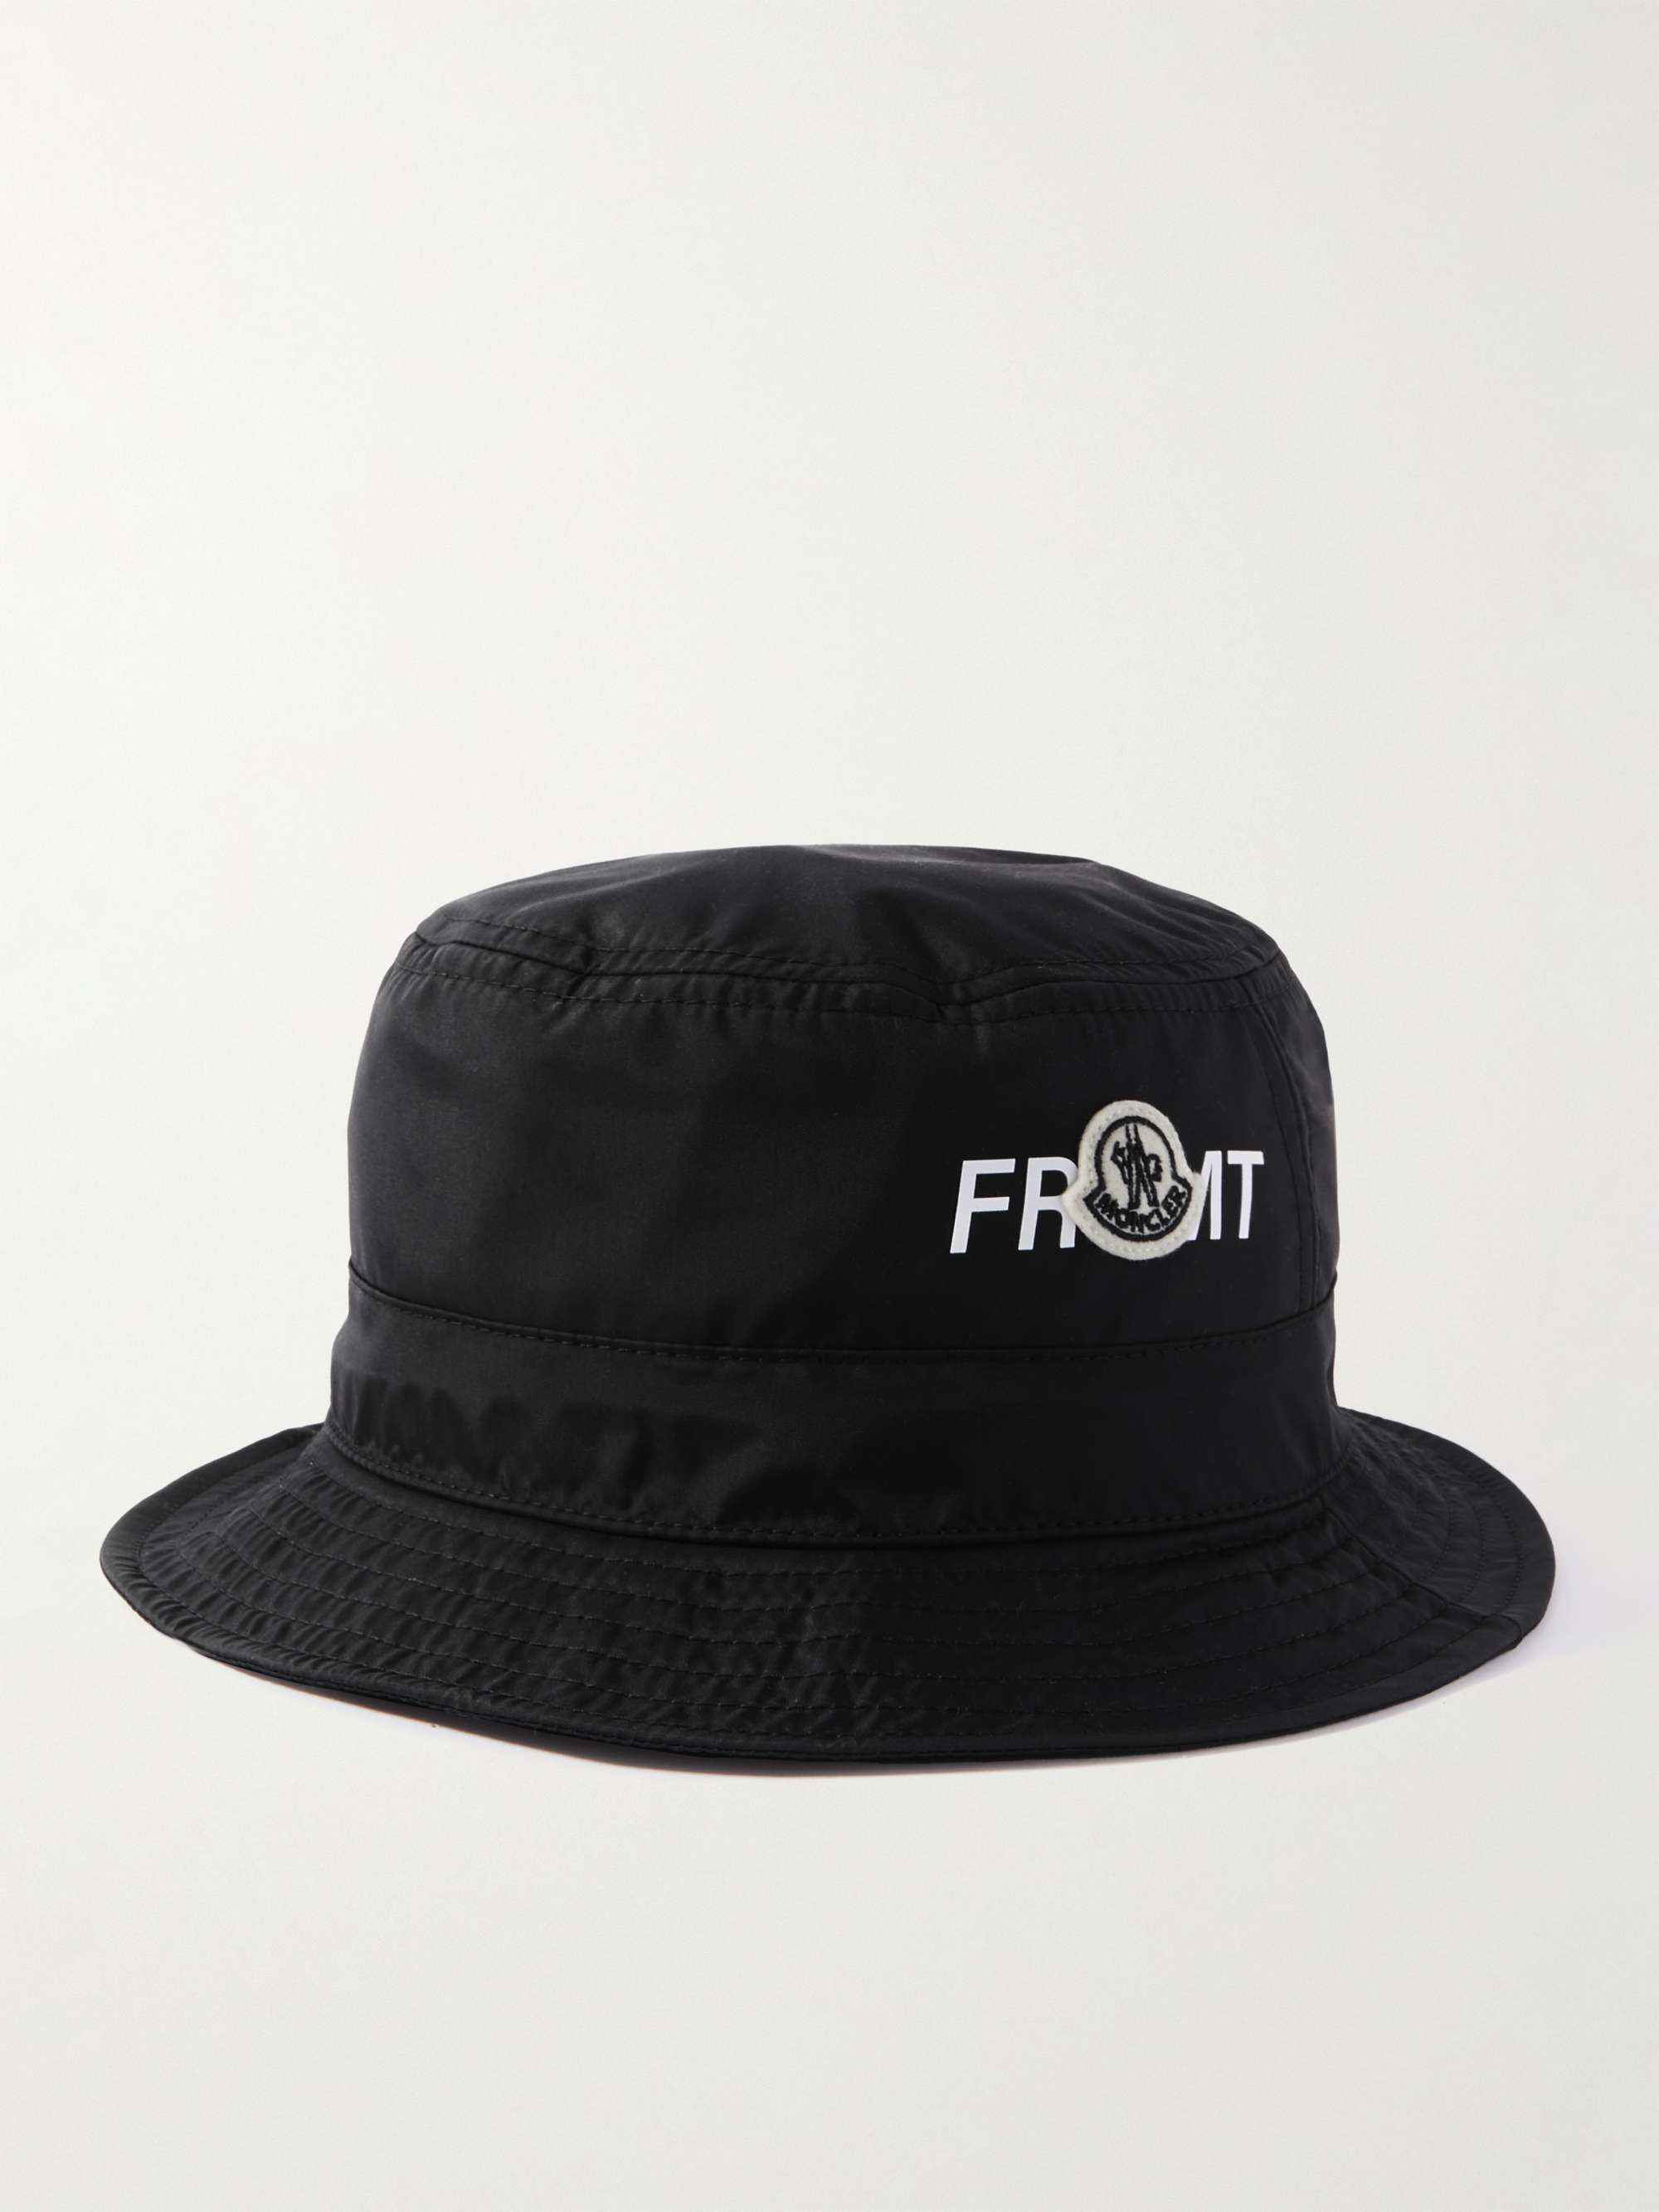 7 Moncler FRGMT Hiroshi Fujiwara Logo-Appliquéd Shell Bucket Hat